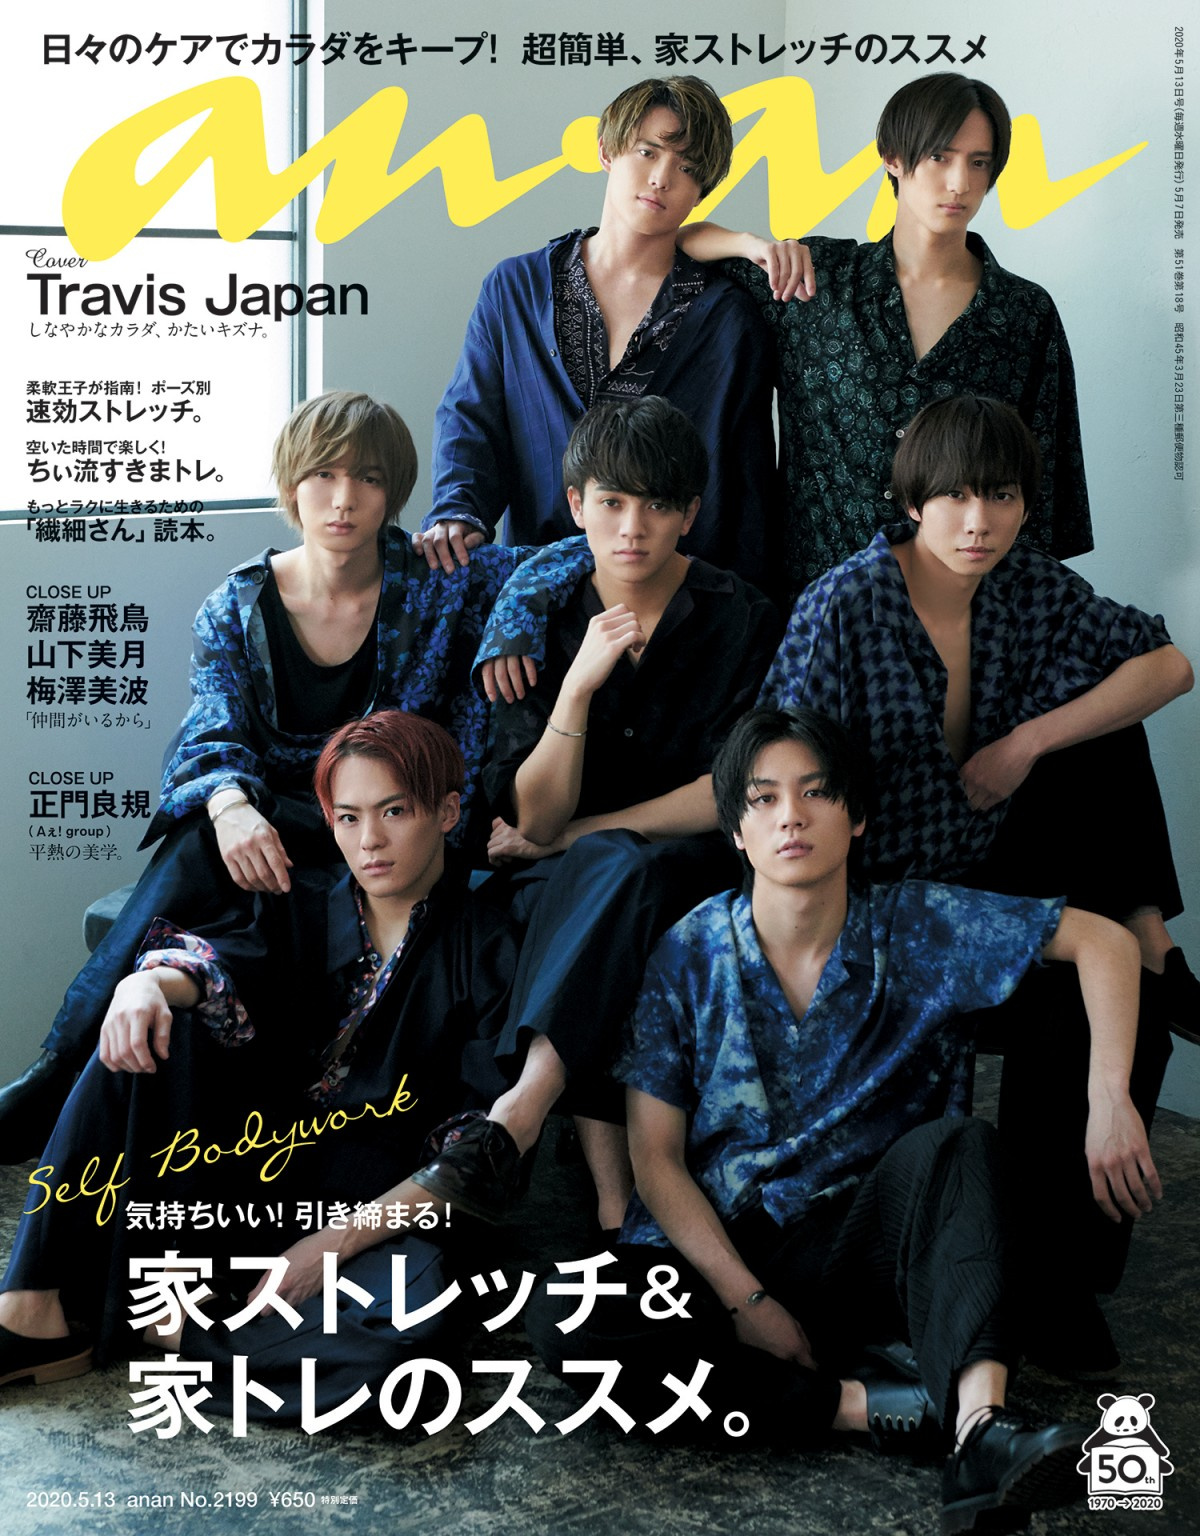 Travisjapan 初表紙の Anan 緊急重版決定 Oricon News